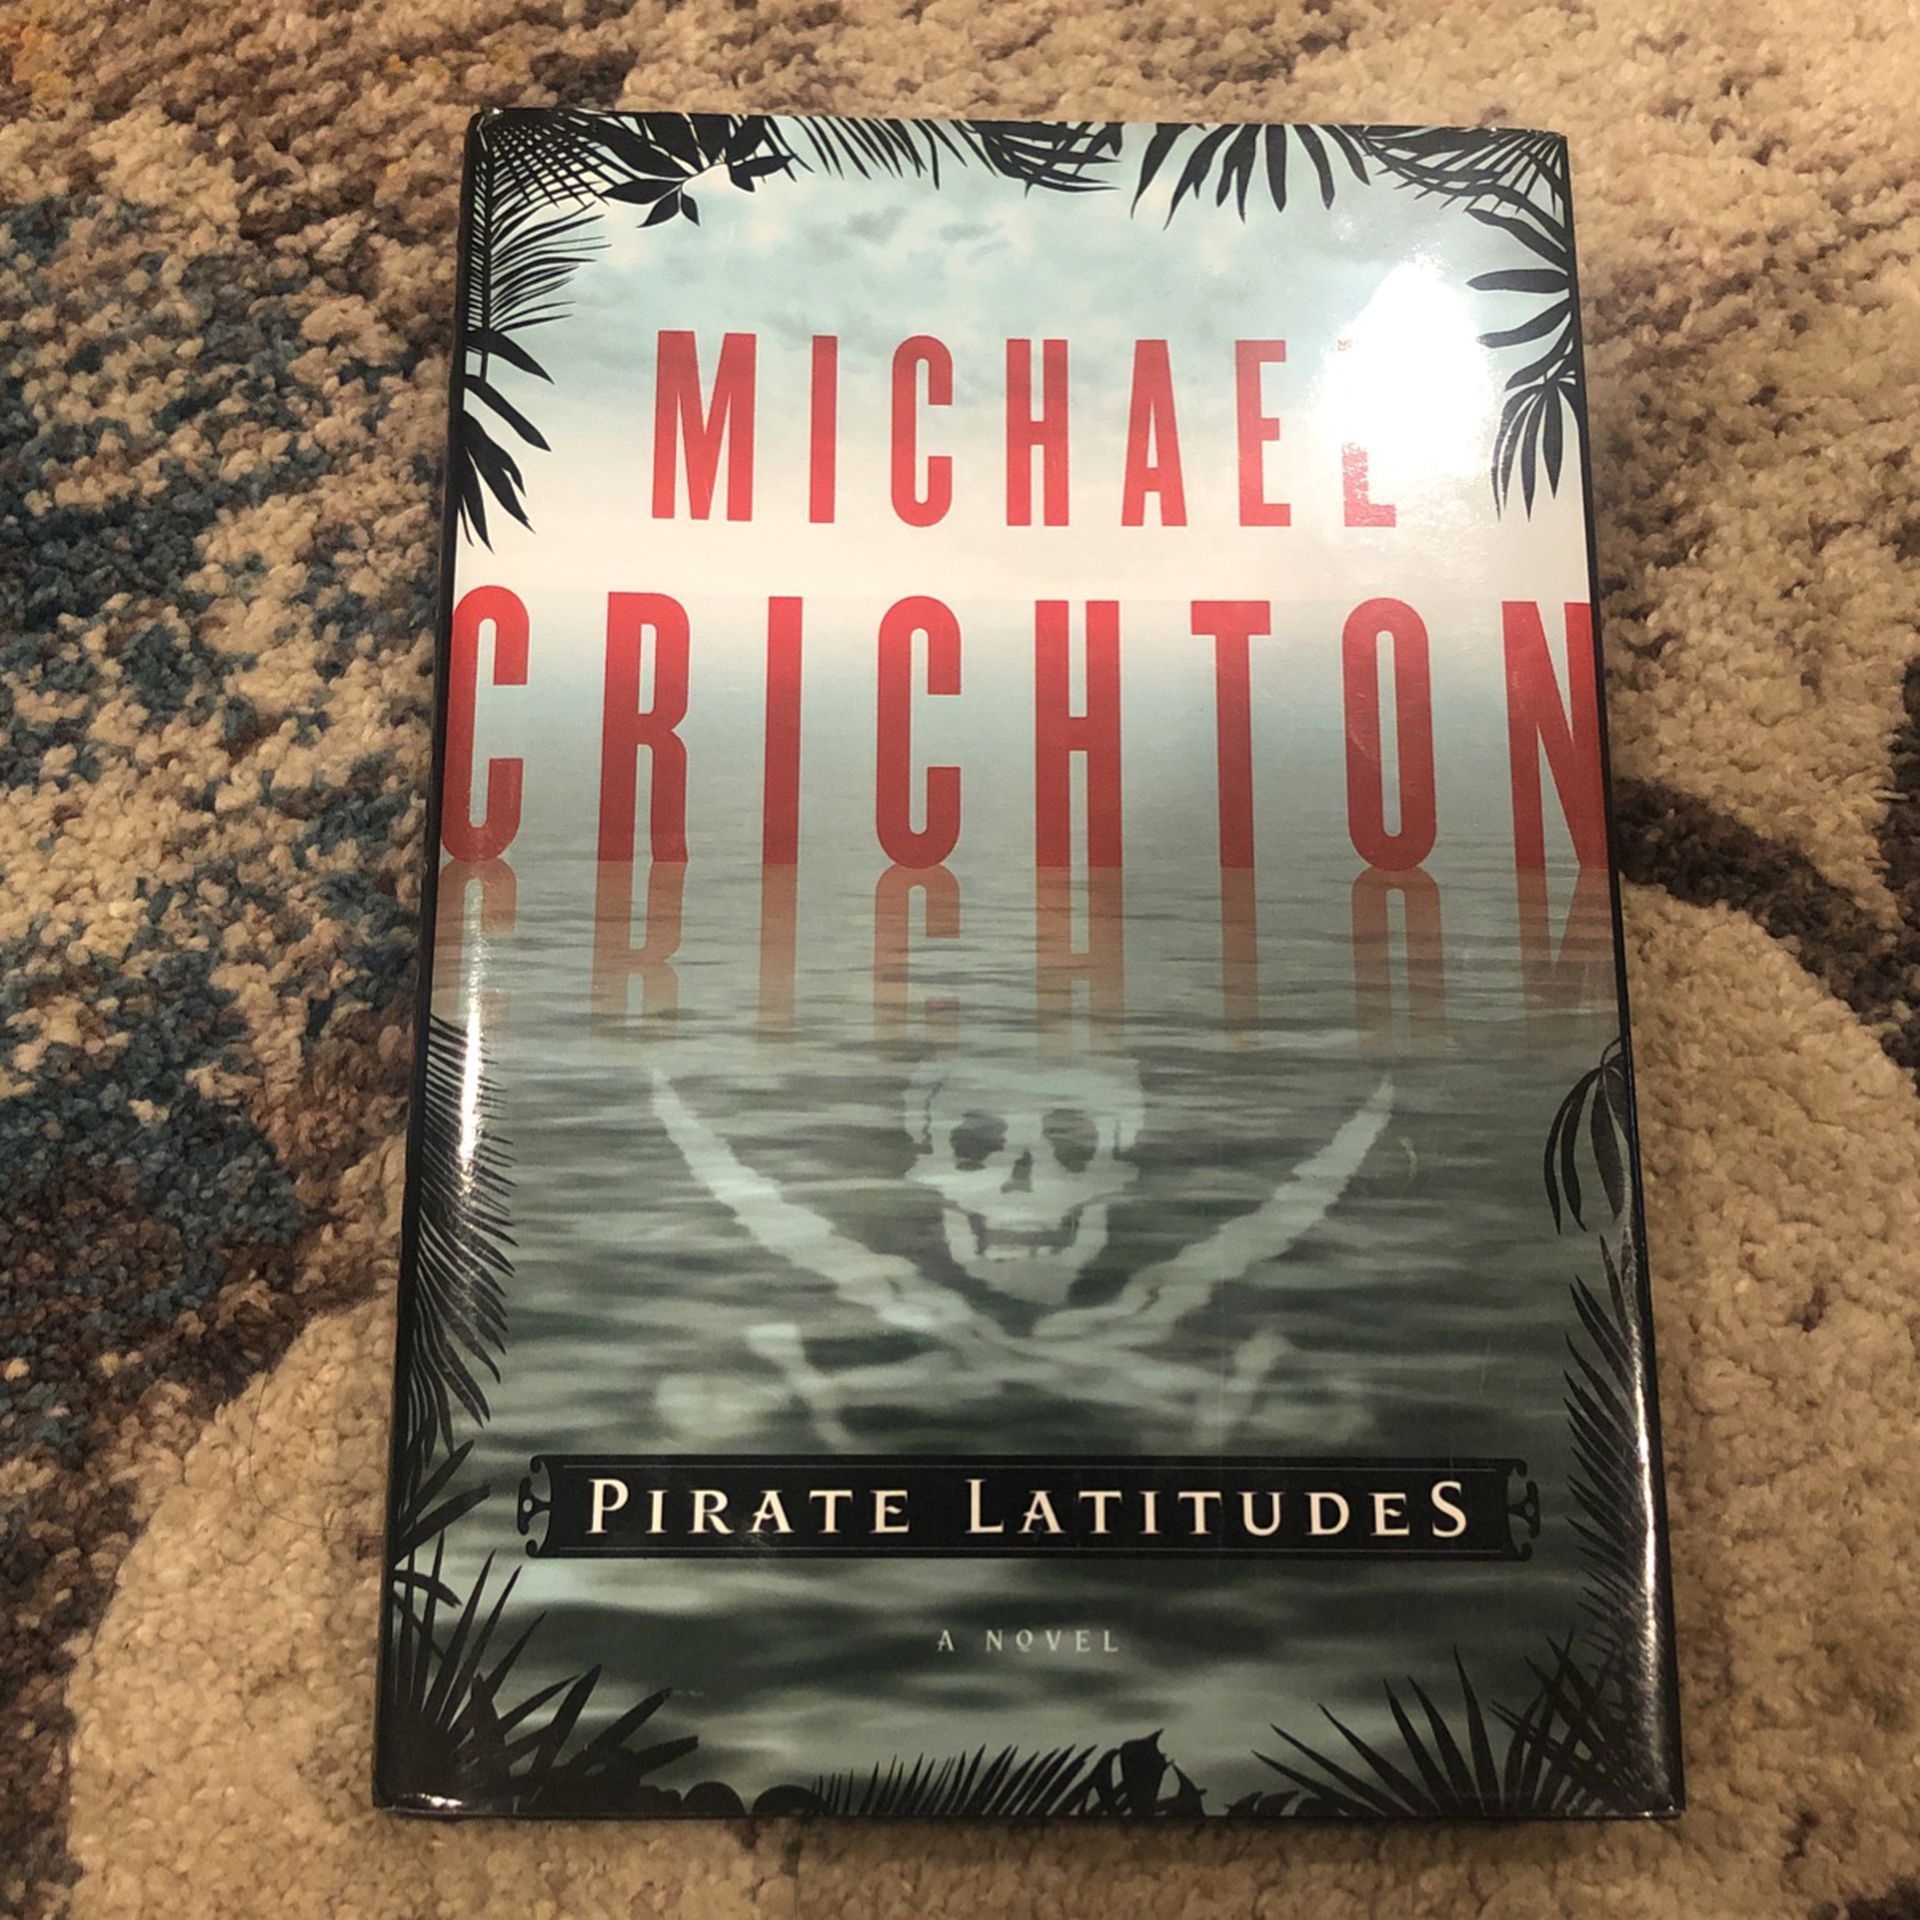 Pirate Latitudes by Michael Crichton 